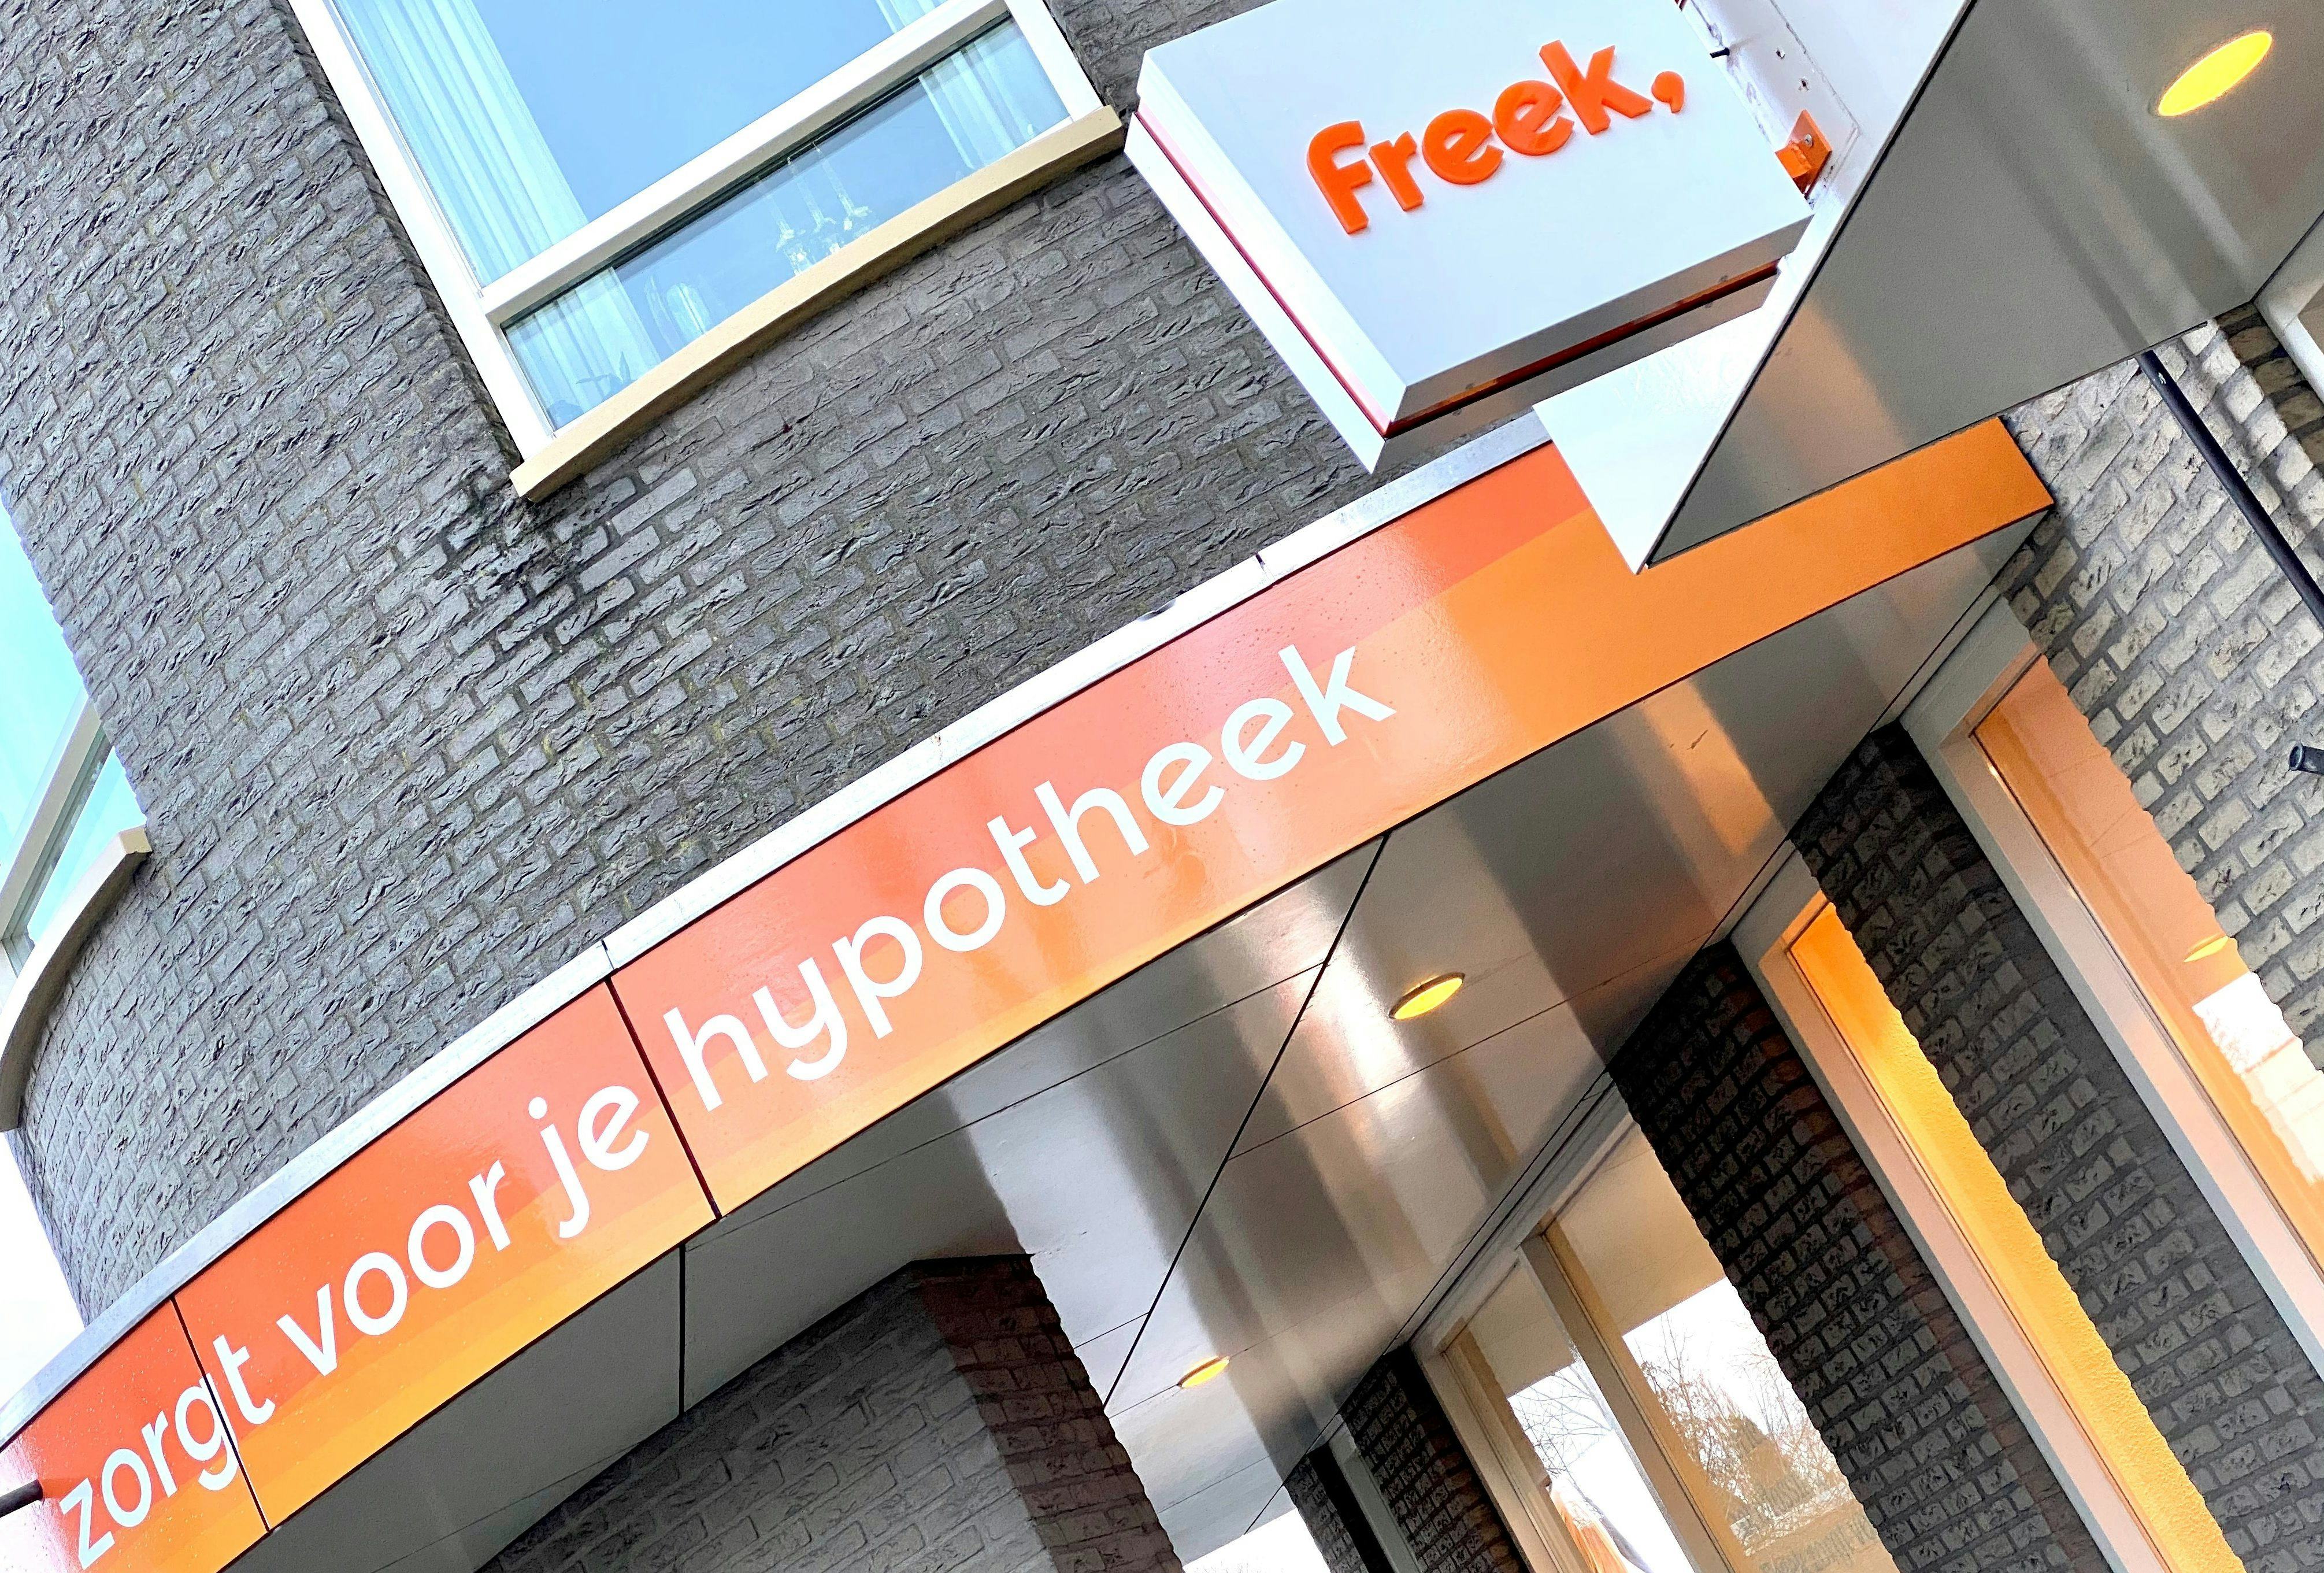 Hypotheek Visie Uden en Arnhem is nu Freek Hypotheek